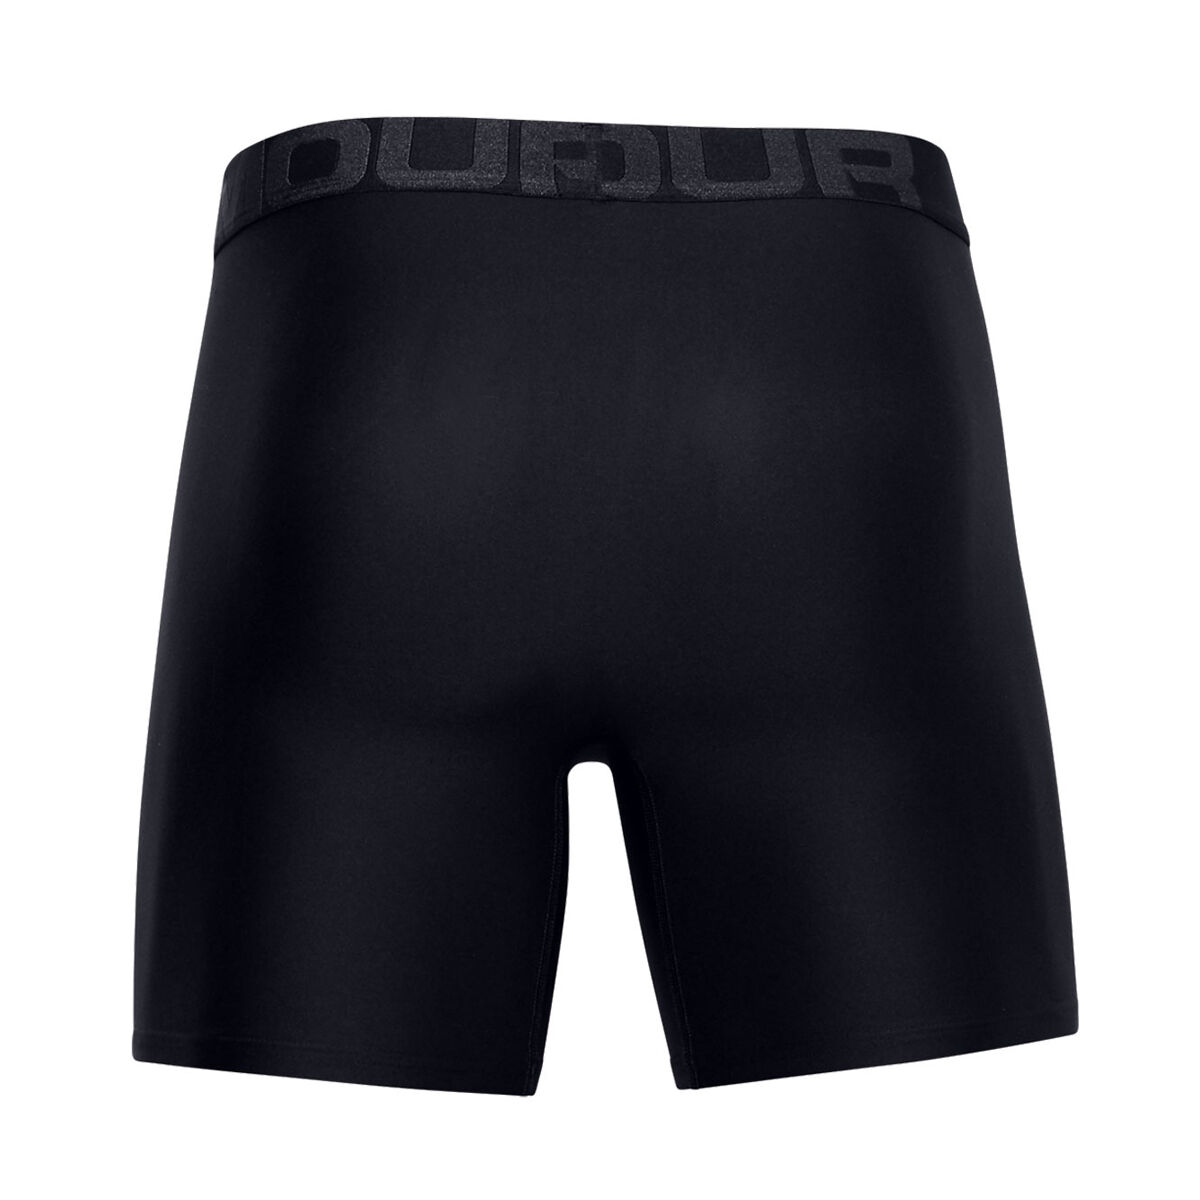 NBA Men's Athletic Wear Black & White Boxer Briefs Underwear Small Spandex  NWT 